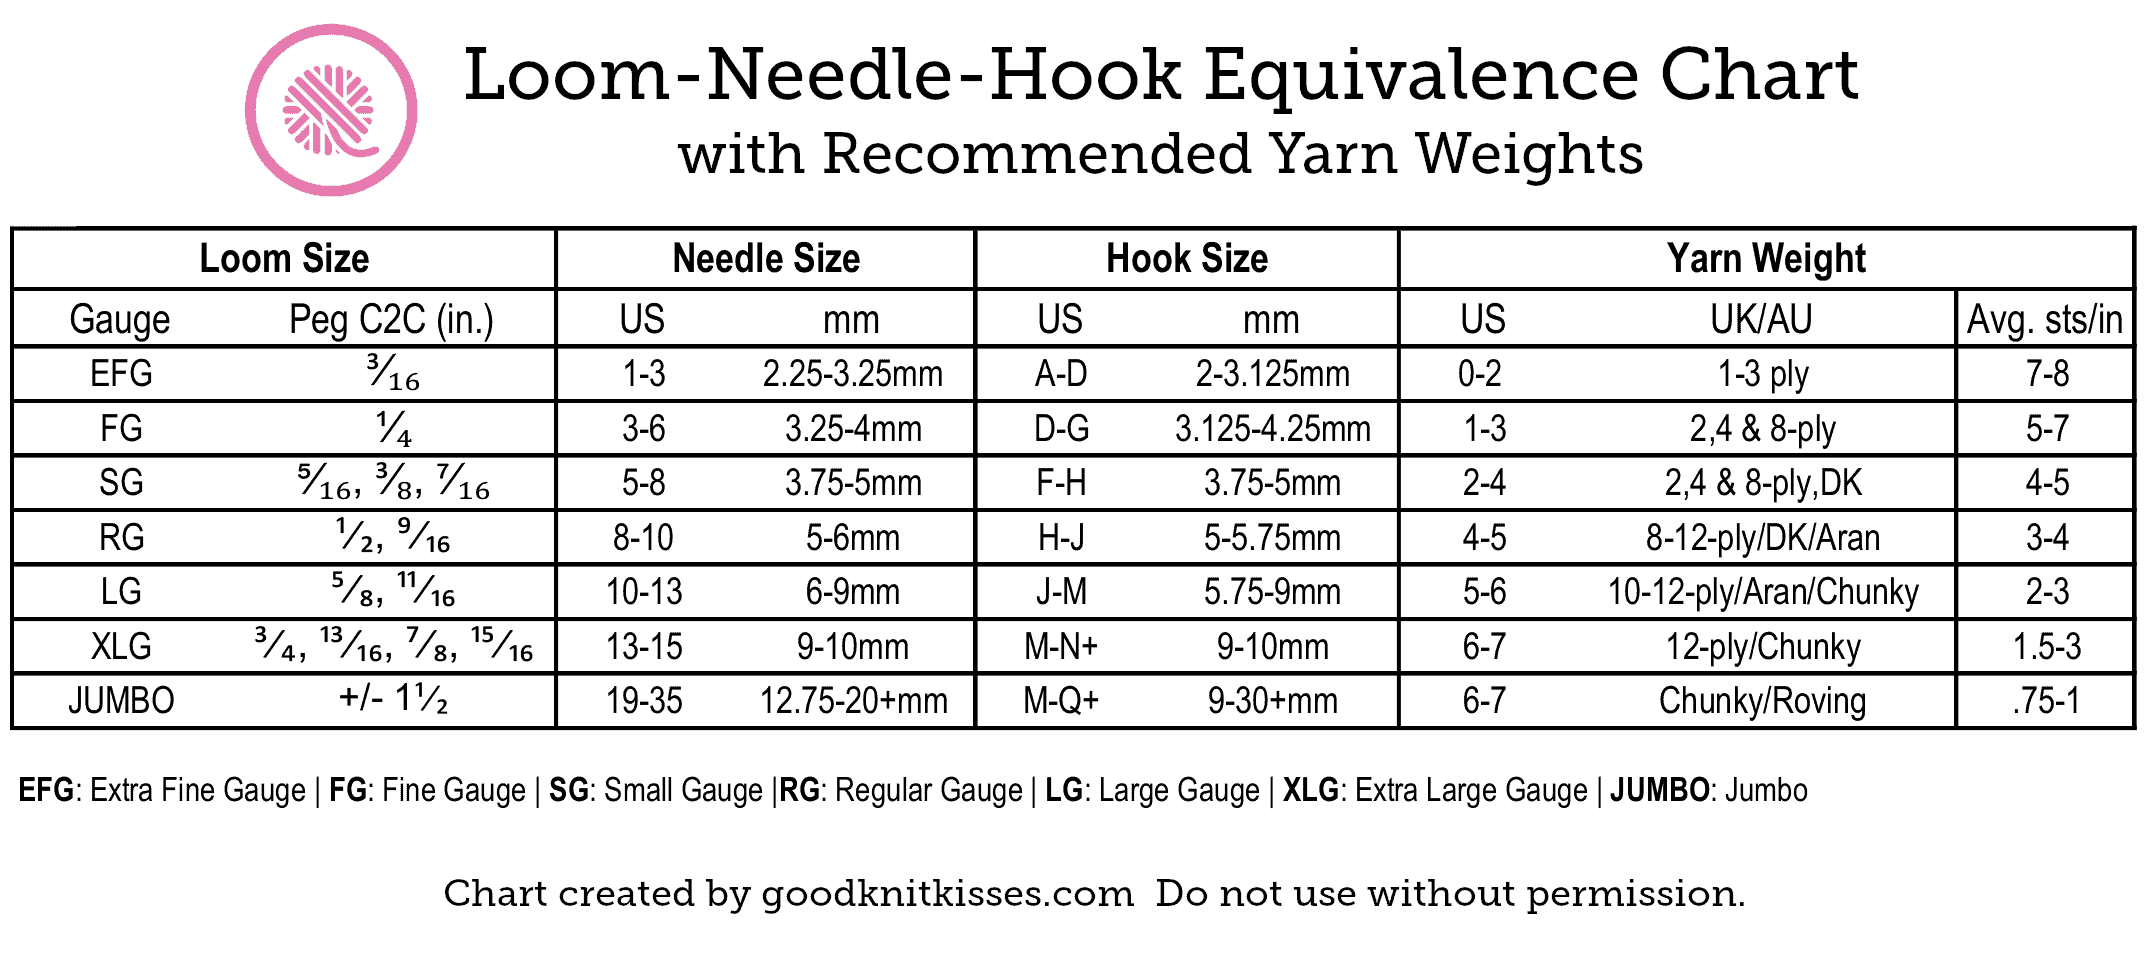 66 peg small gauge loom and size 6 super bulky yarn : r/LoomKnitting